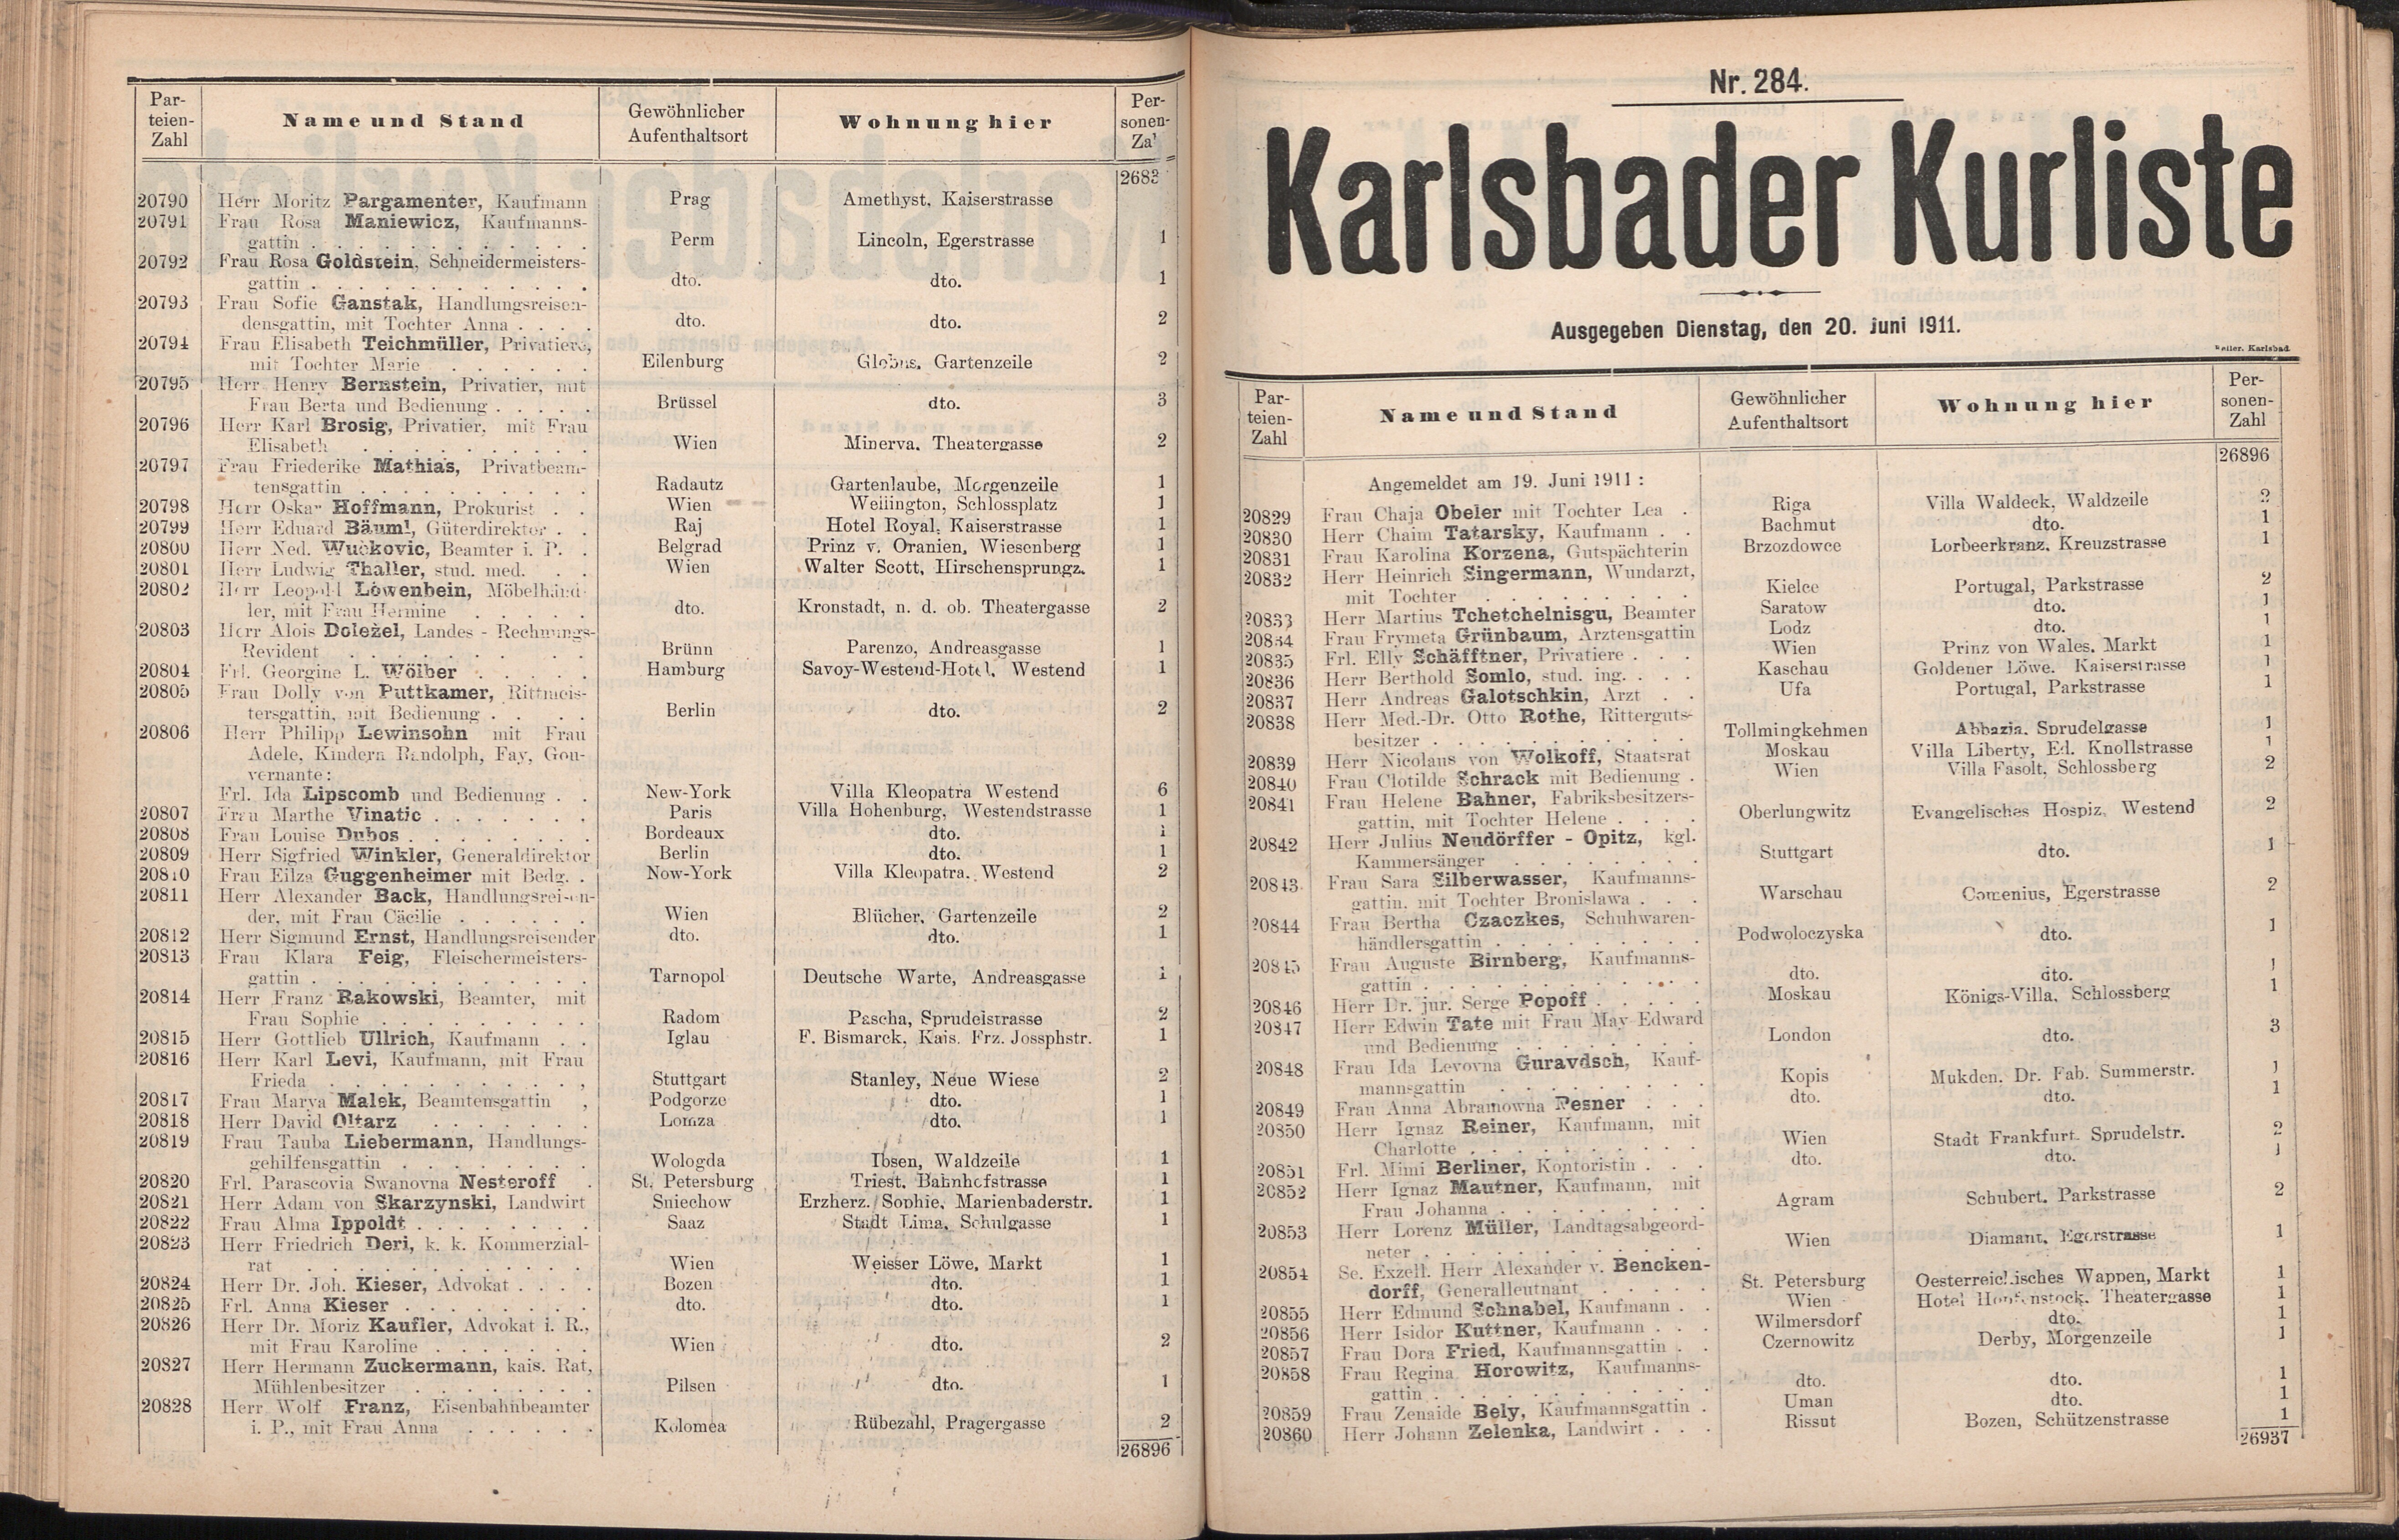 387. soap-kv_knihovna_karlsbader-kurliste-1911-1_3880